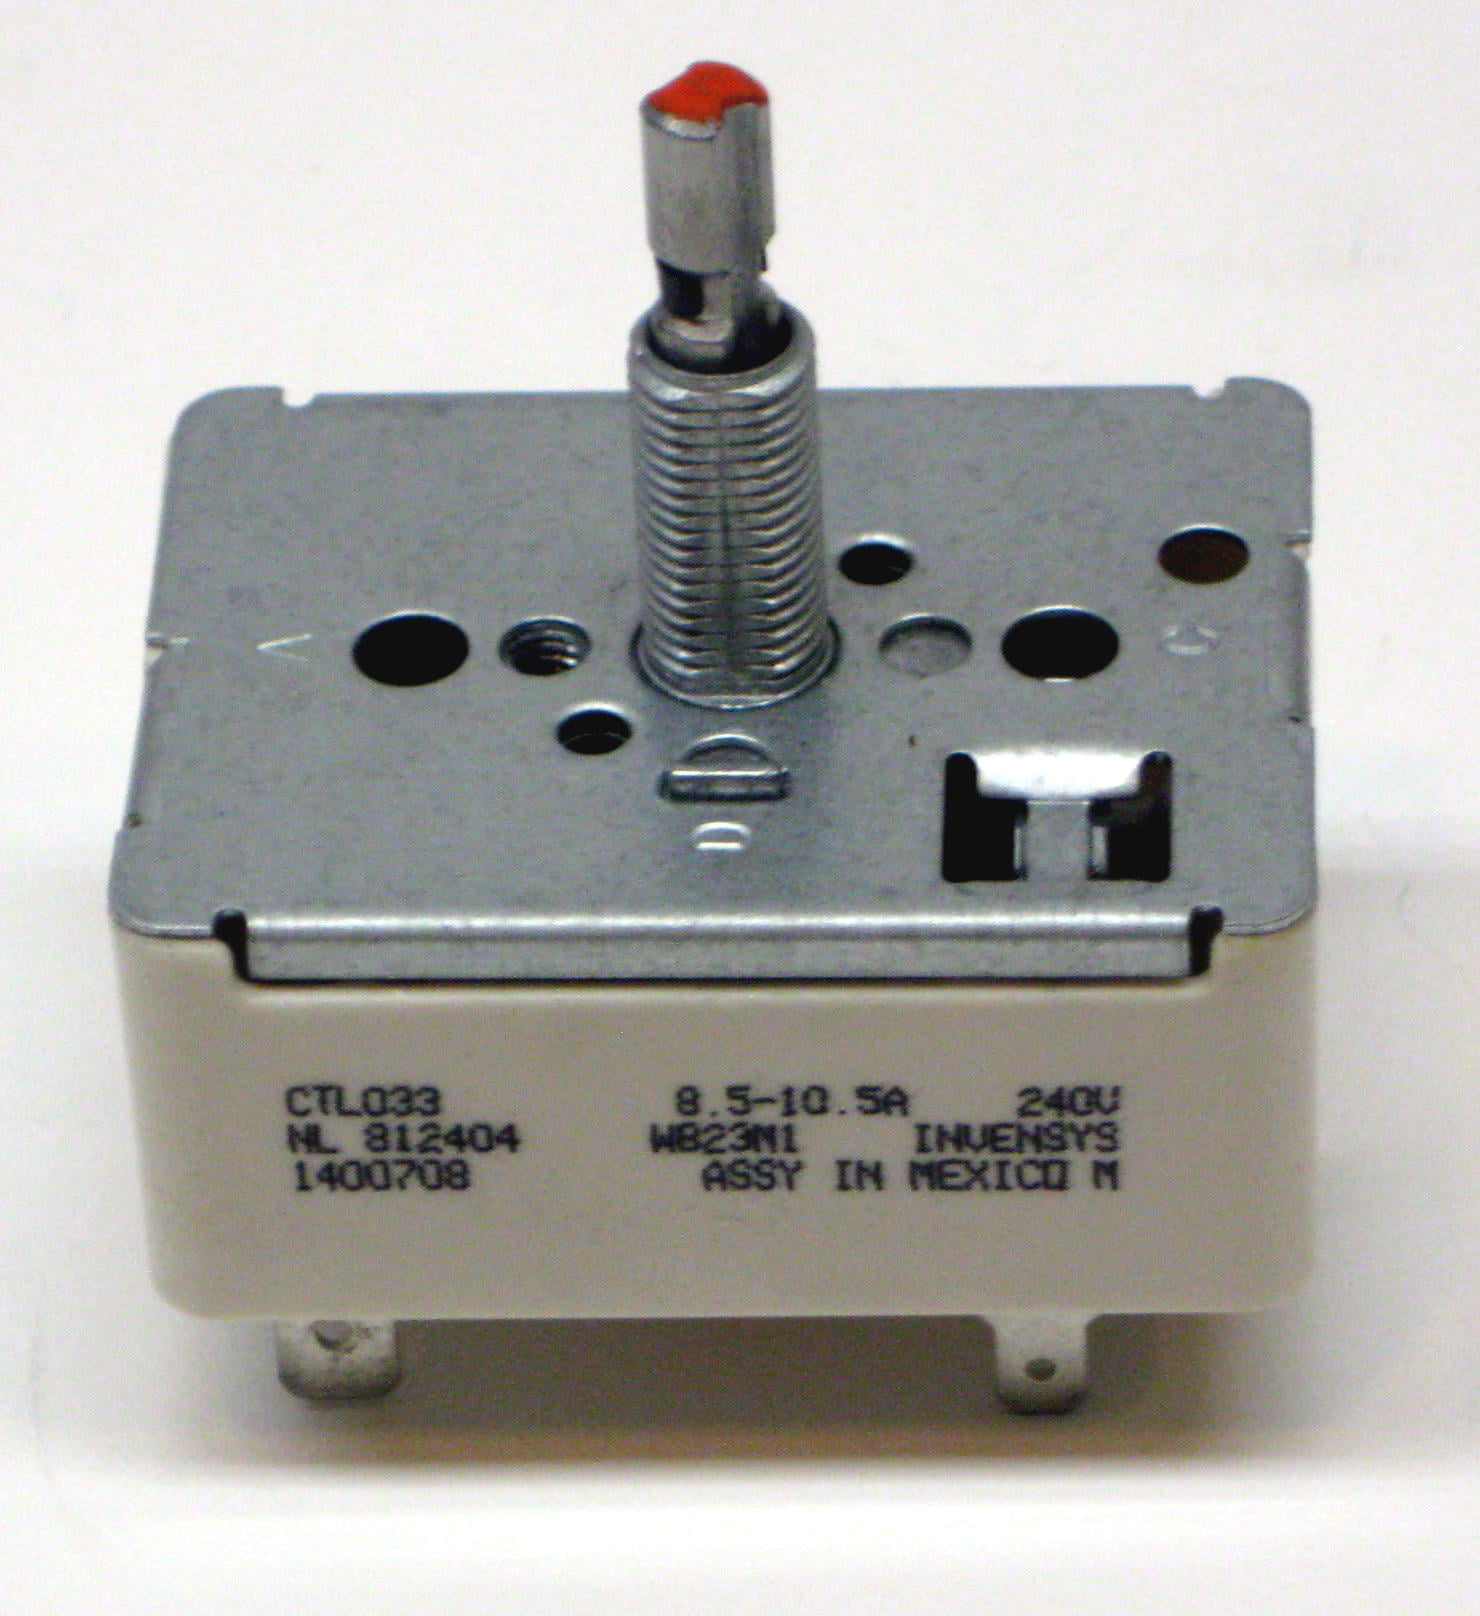 Range Burner Control Infinite Switch for GE WB23M1 CTL033 AP2622380 PS236365